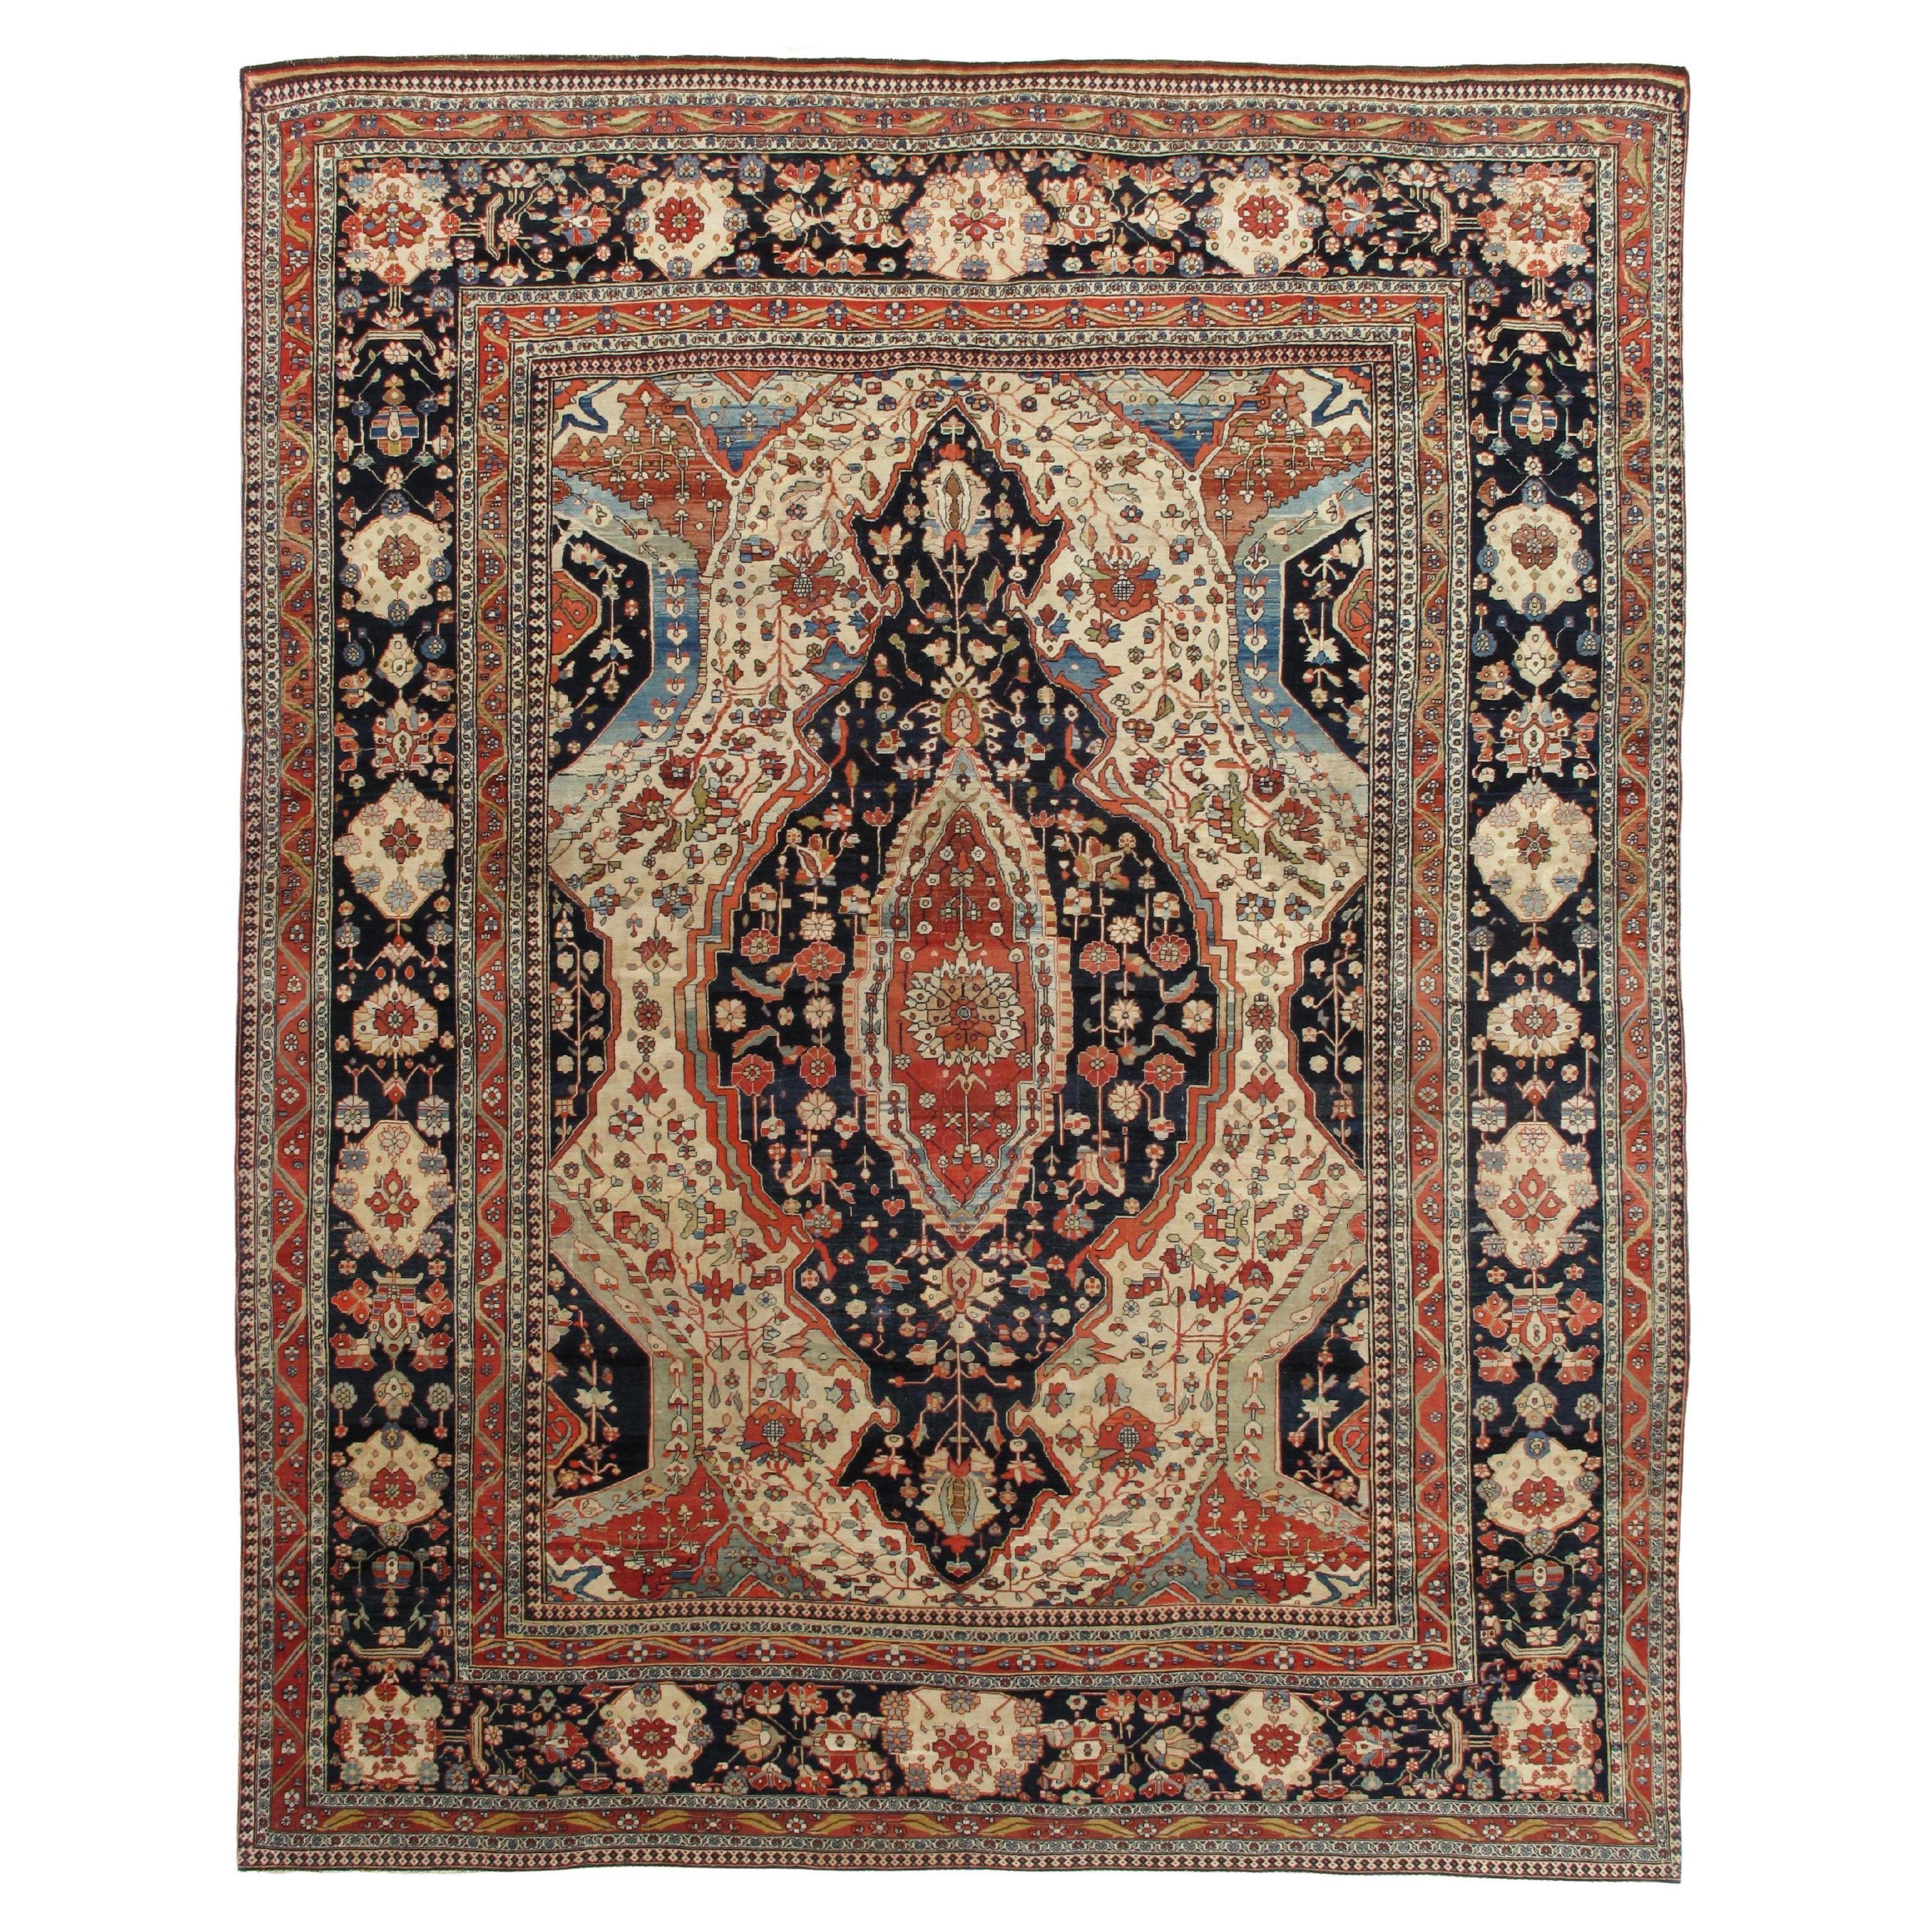 Antique Persian Mohtasham Kashan Carpet, Traditional, Ivory, Blue, Green, Reds